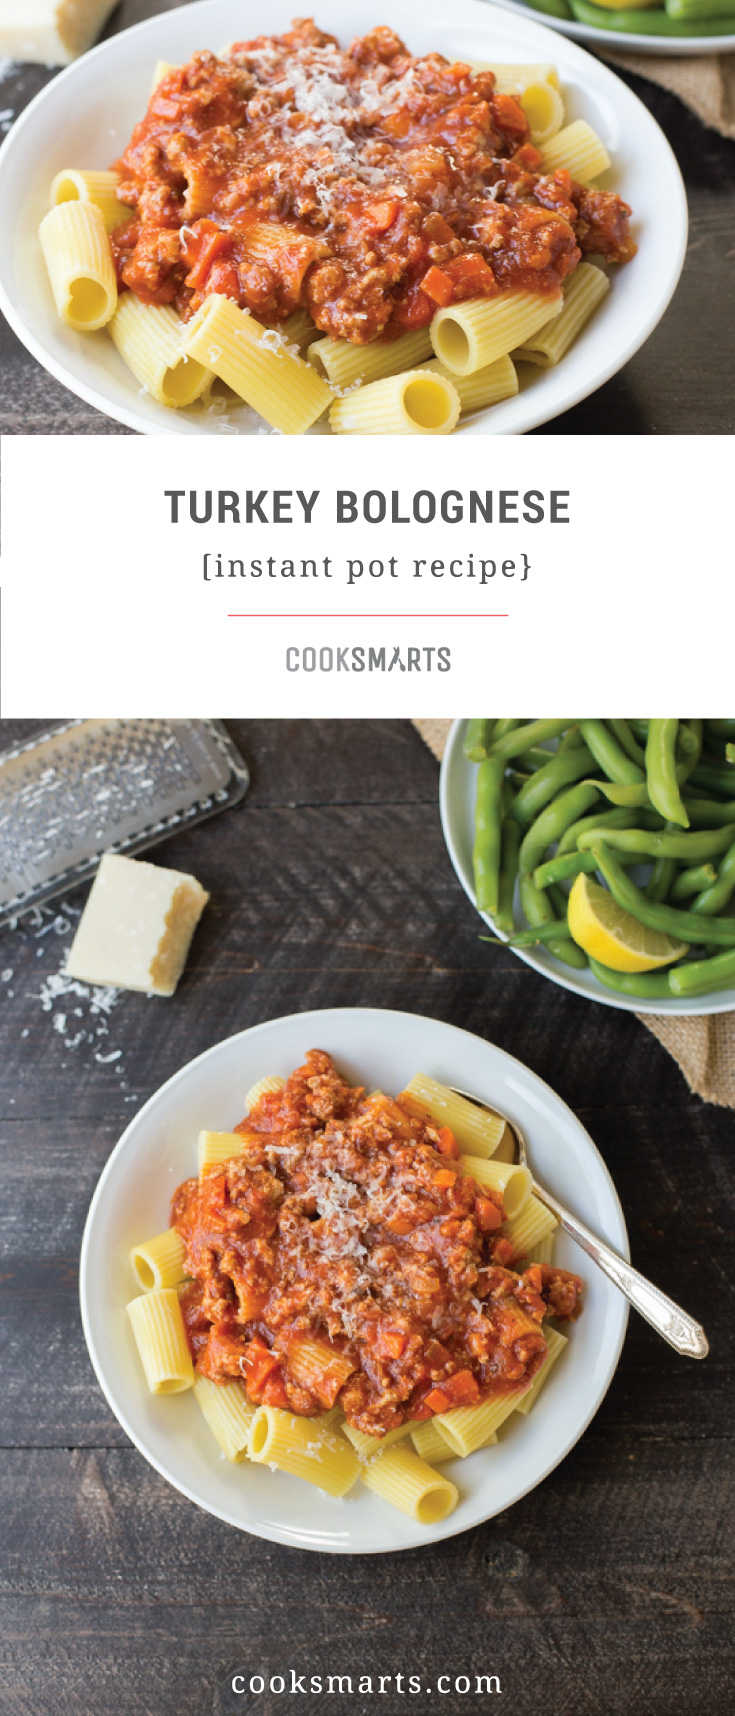 Instant Pot Turkey Bolognese Recipe | Cook Smarts